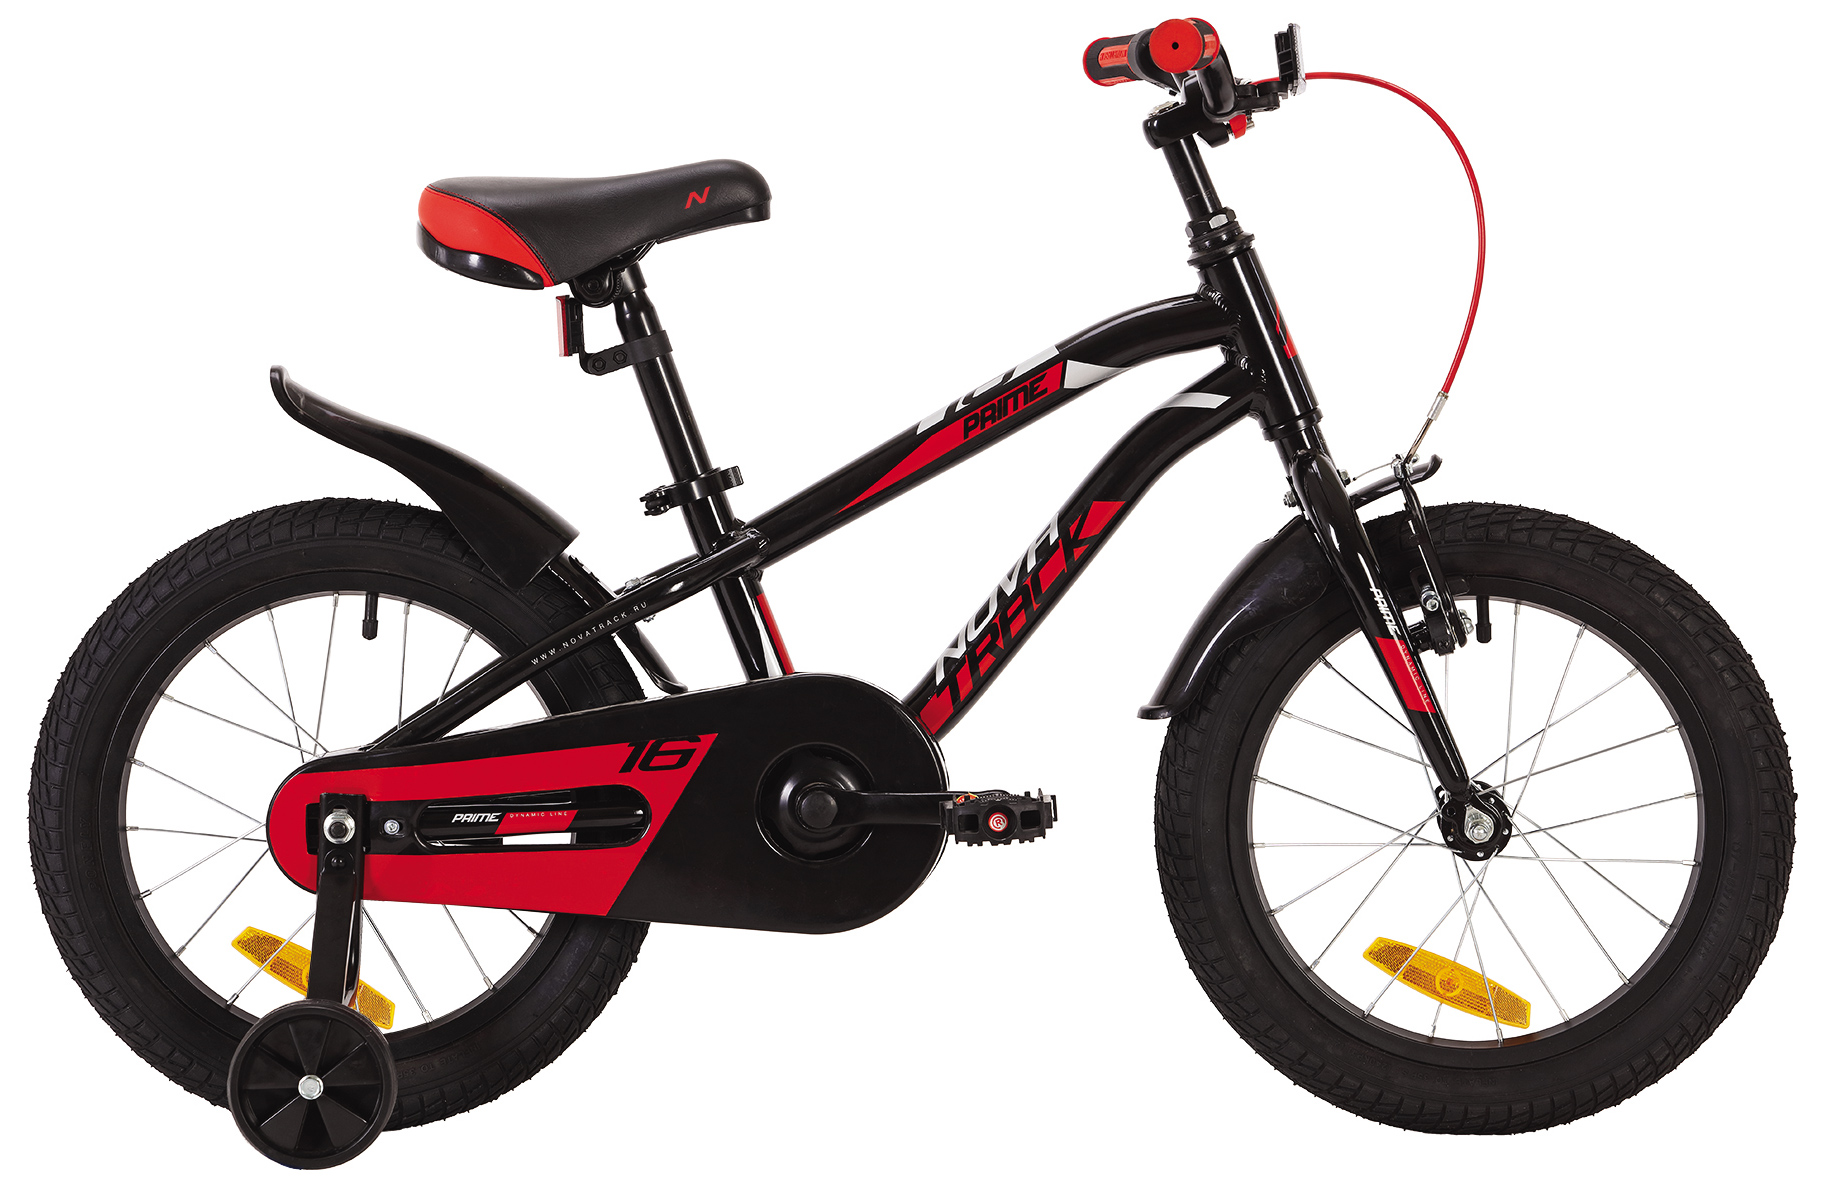  Велосипед детский Novatrack Prime 16 2019